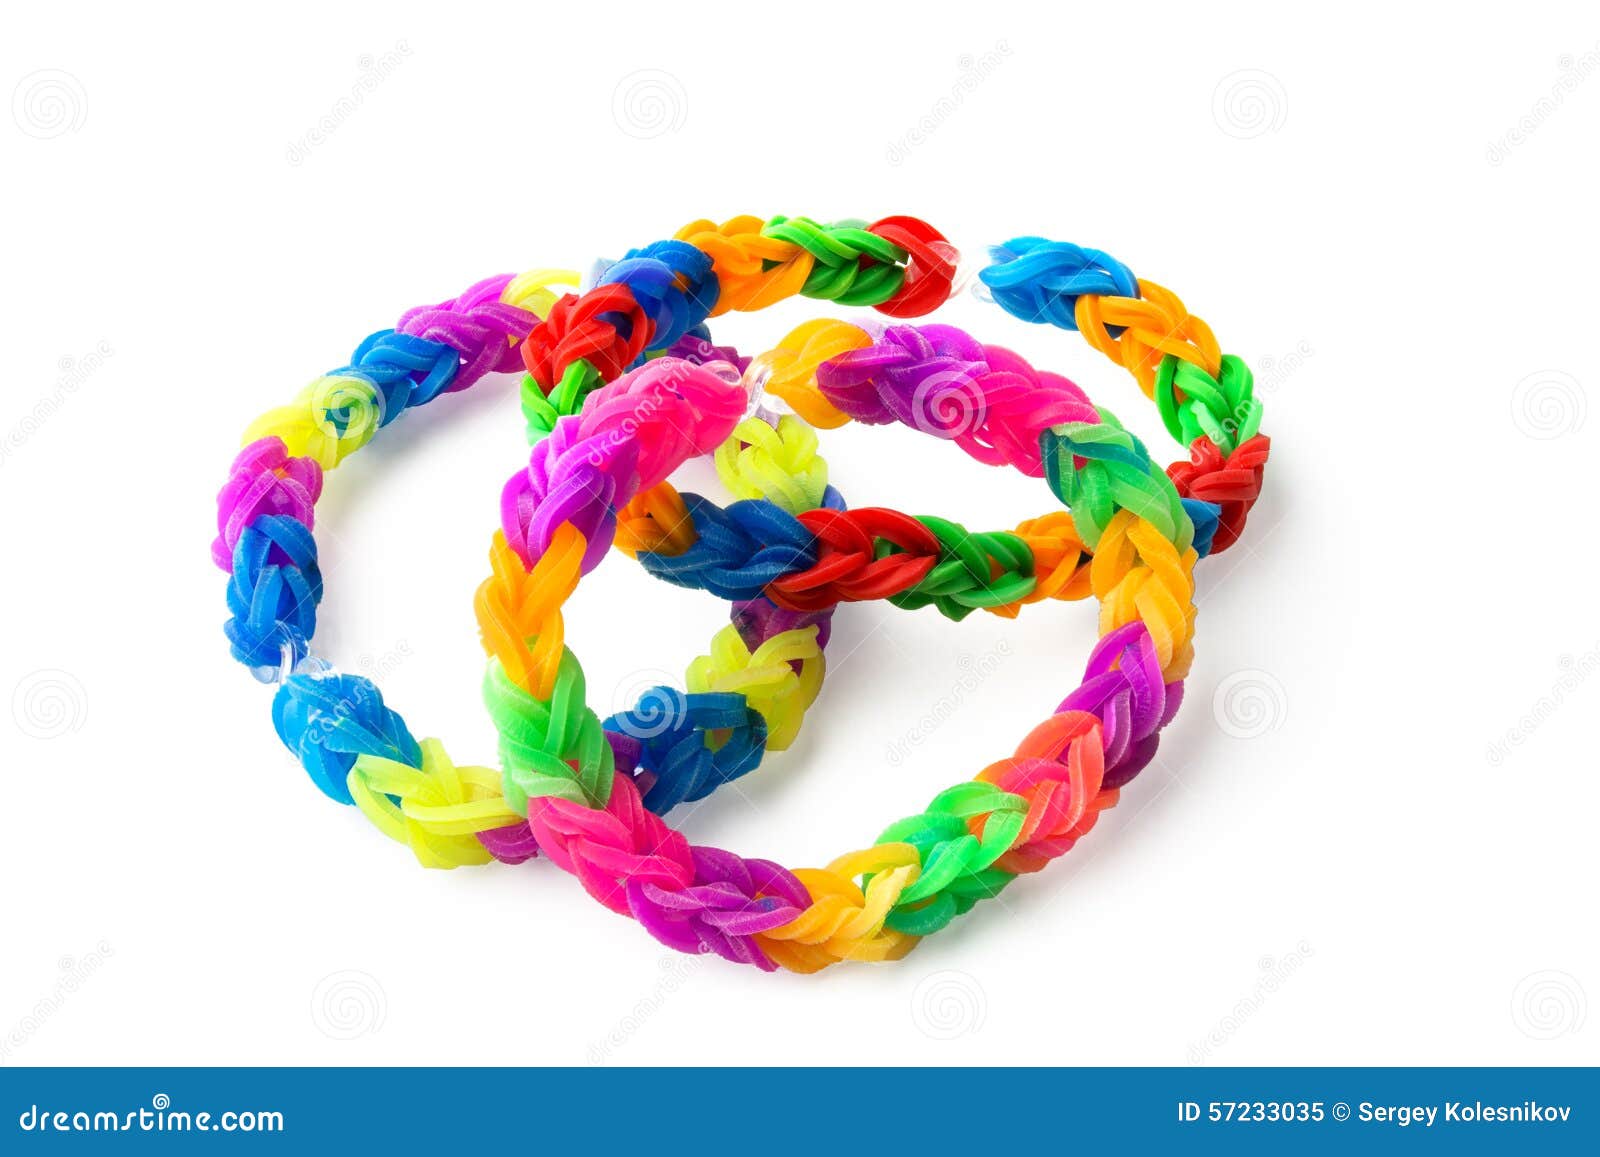 Bracelets Made With Rubber Bands Stock Image - Image of hand, bracelet